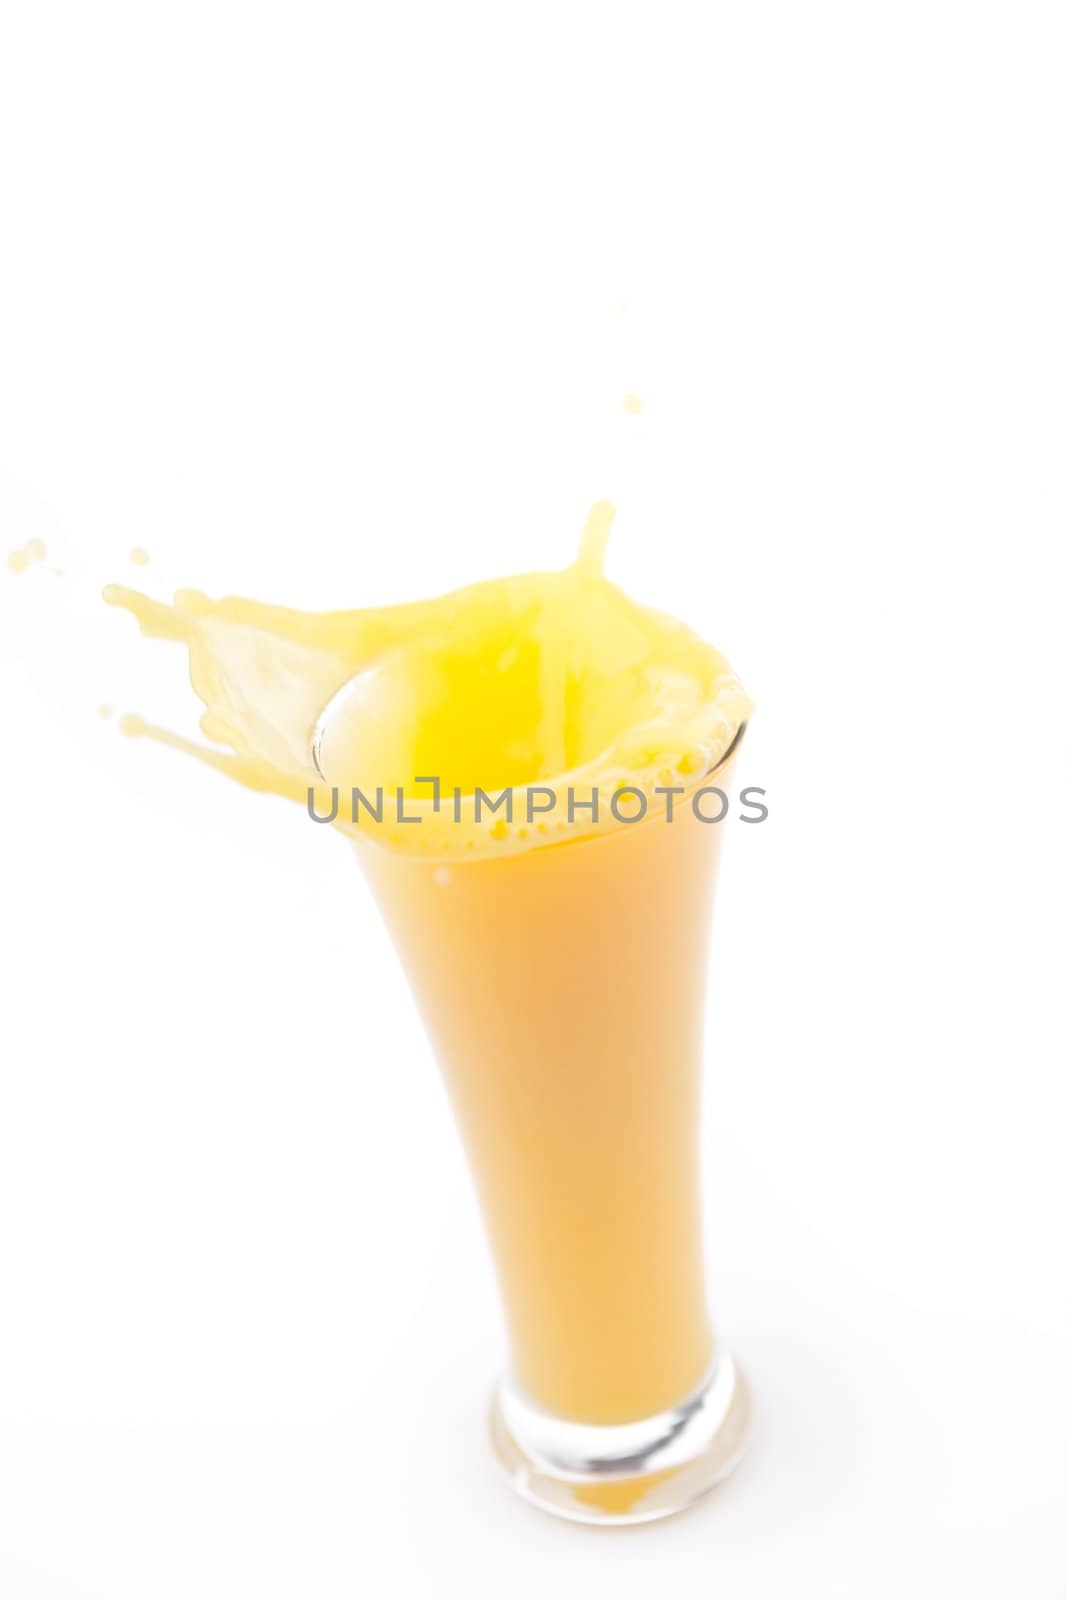 Overlowing glass of orange juice by Wavebreakmedia